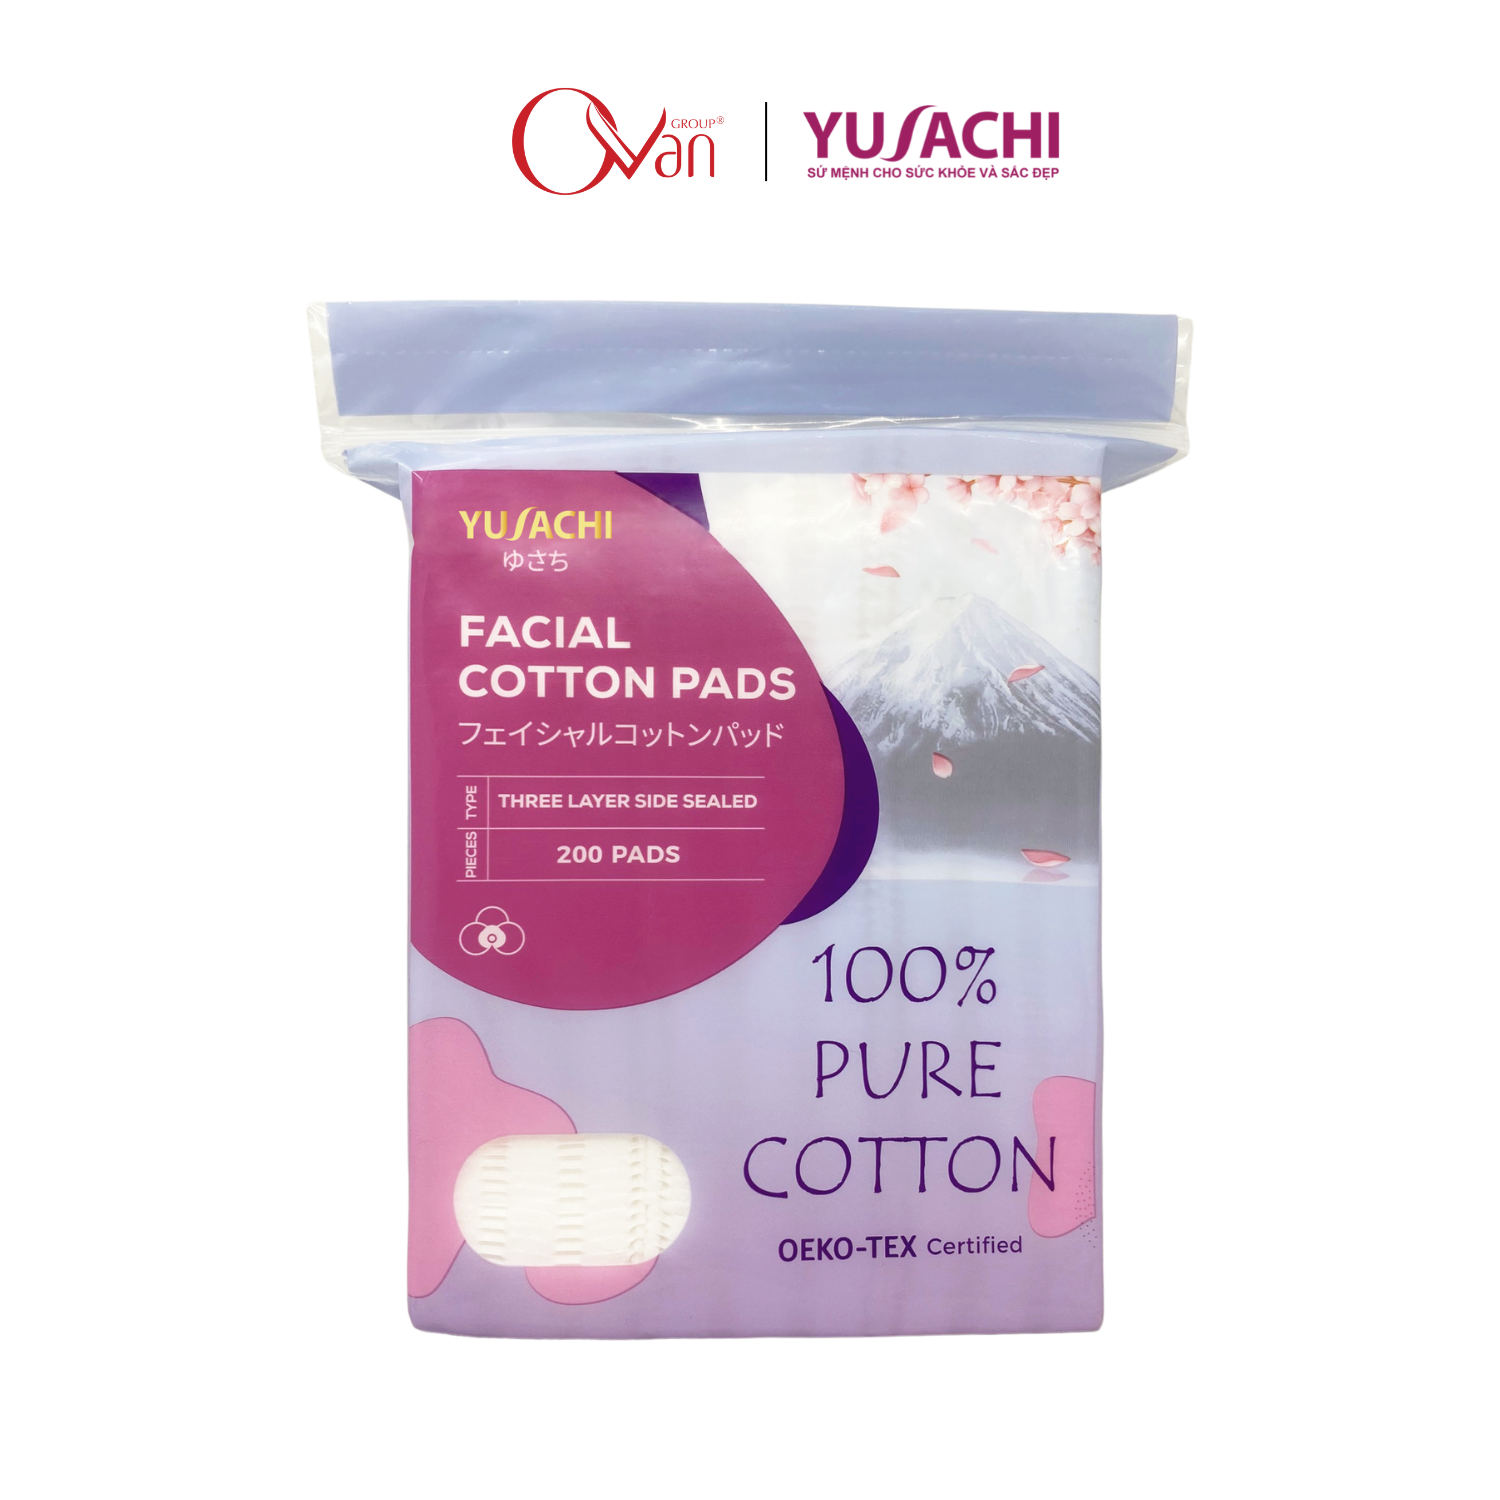 Bông tẩy trang 100% cotton Yusachi 200pcs/gói